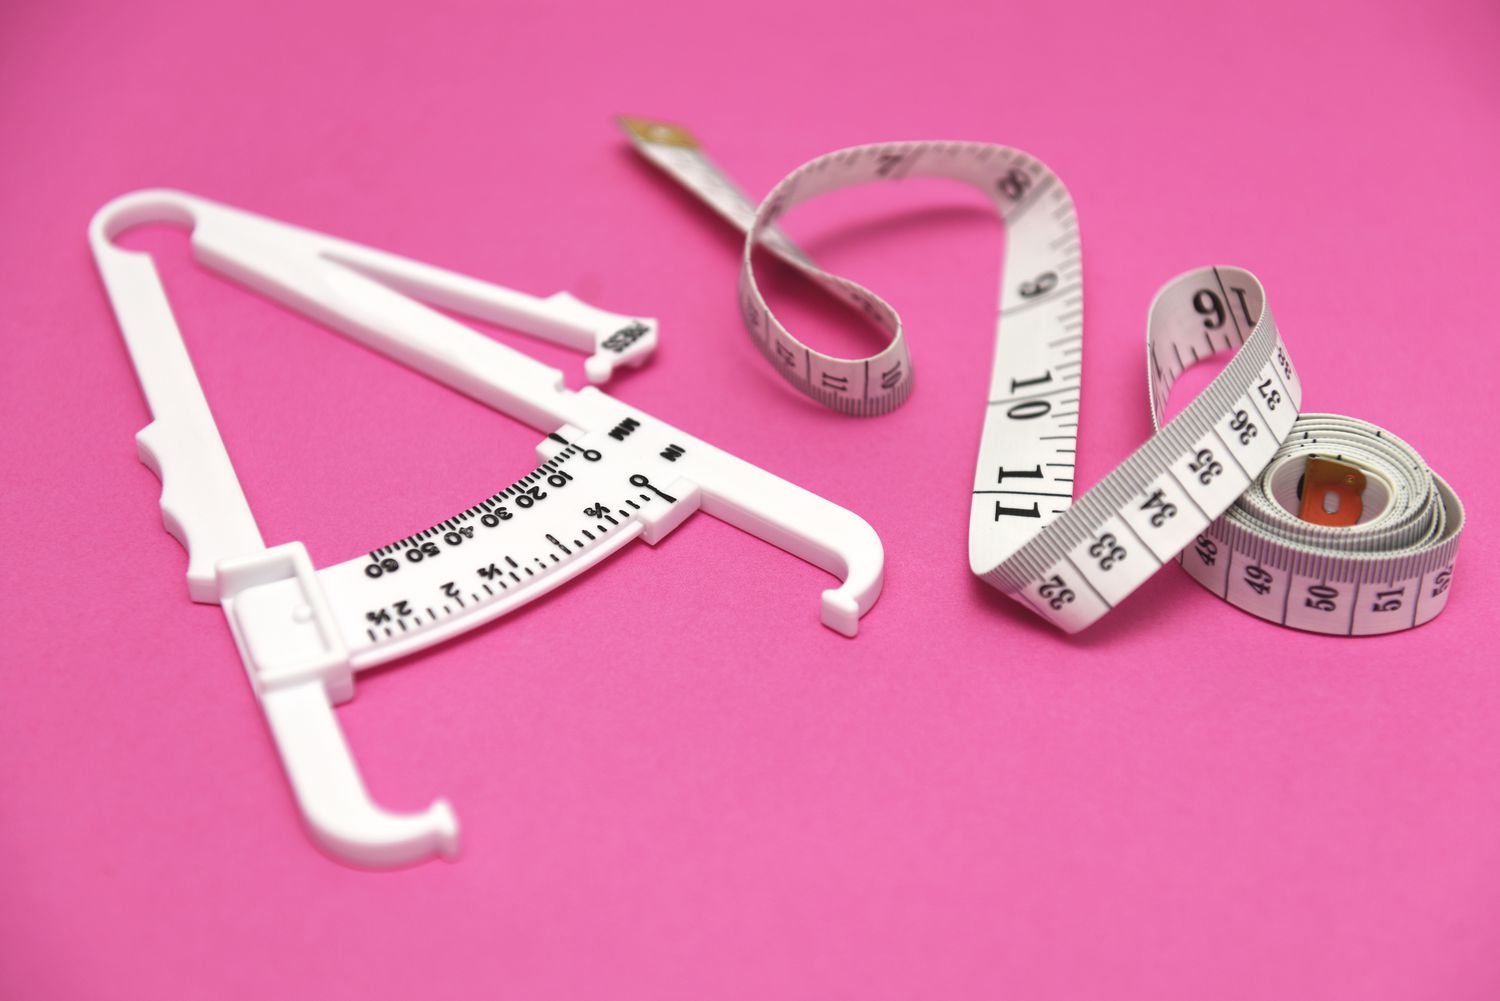 Measuring BMI using calliper and tape measure